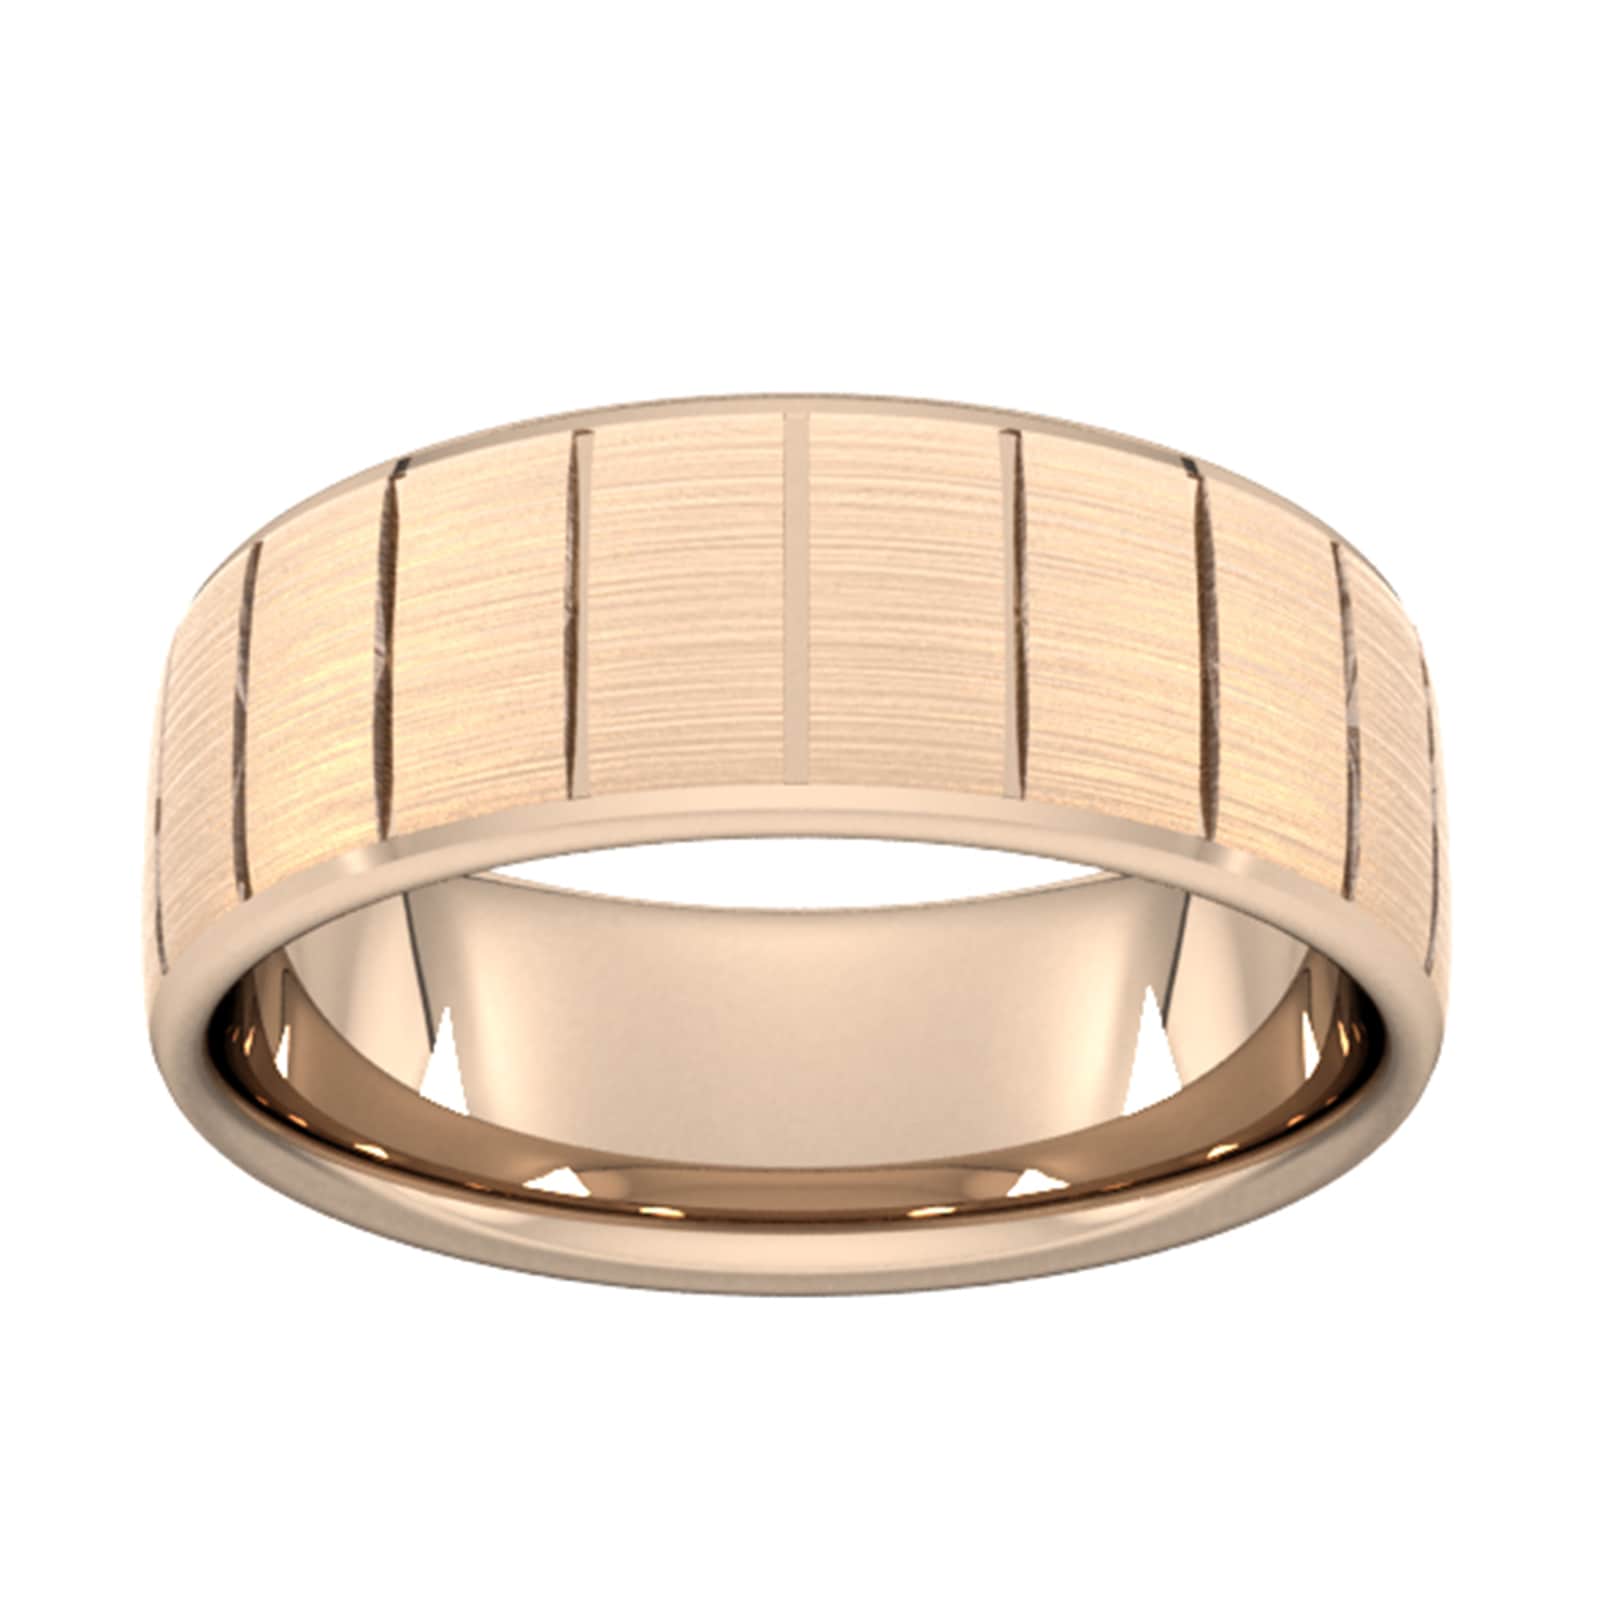 8mm Slight Court Standard Vertical Lines Wedding Ring In 18 Carat Rose Gold - Ring Size J